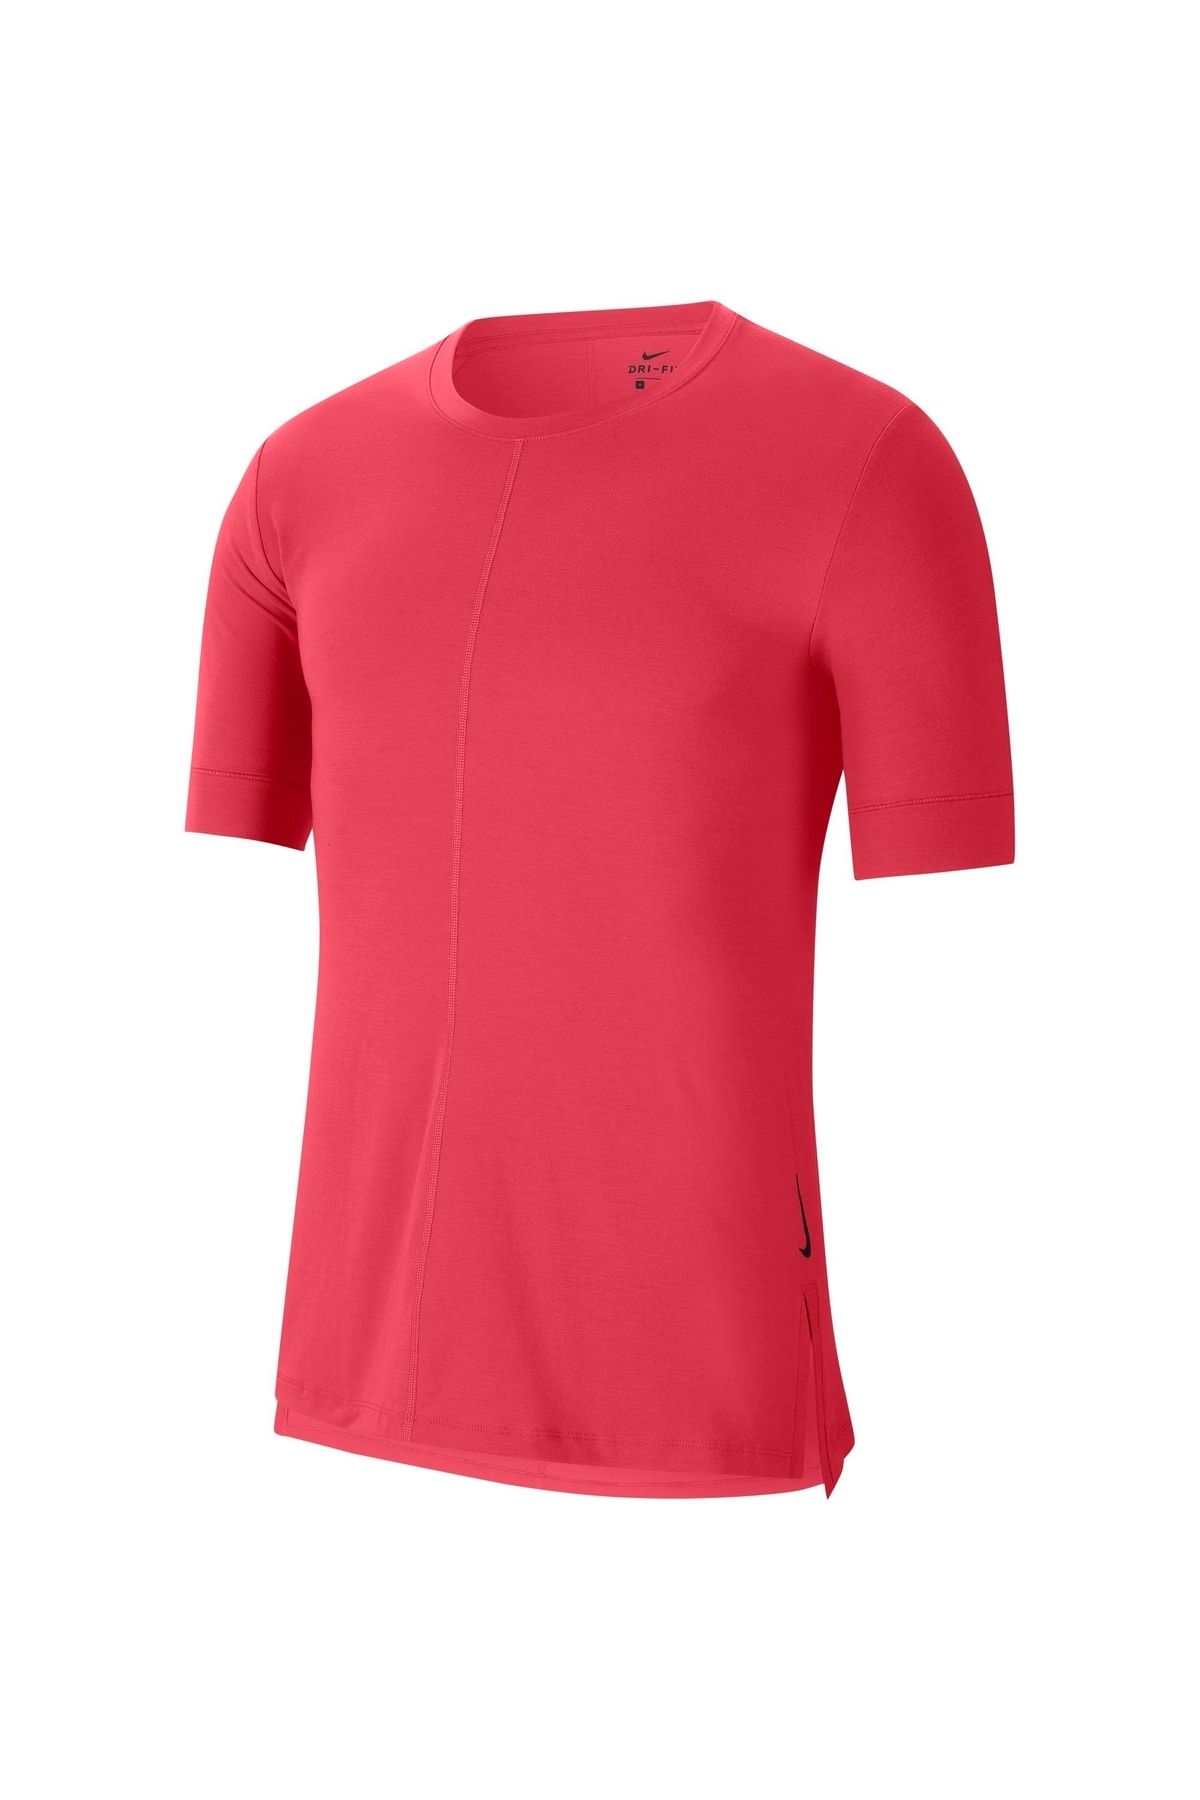 Mens S Small Slim Nike Yoga Short Sleeve Training Top T-Shirt Pink  BV4034-646